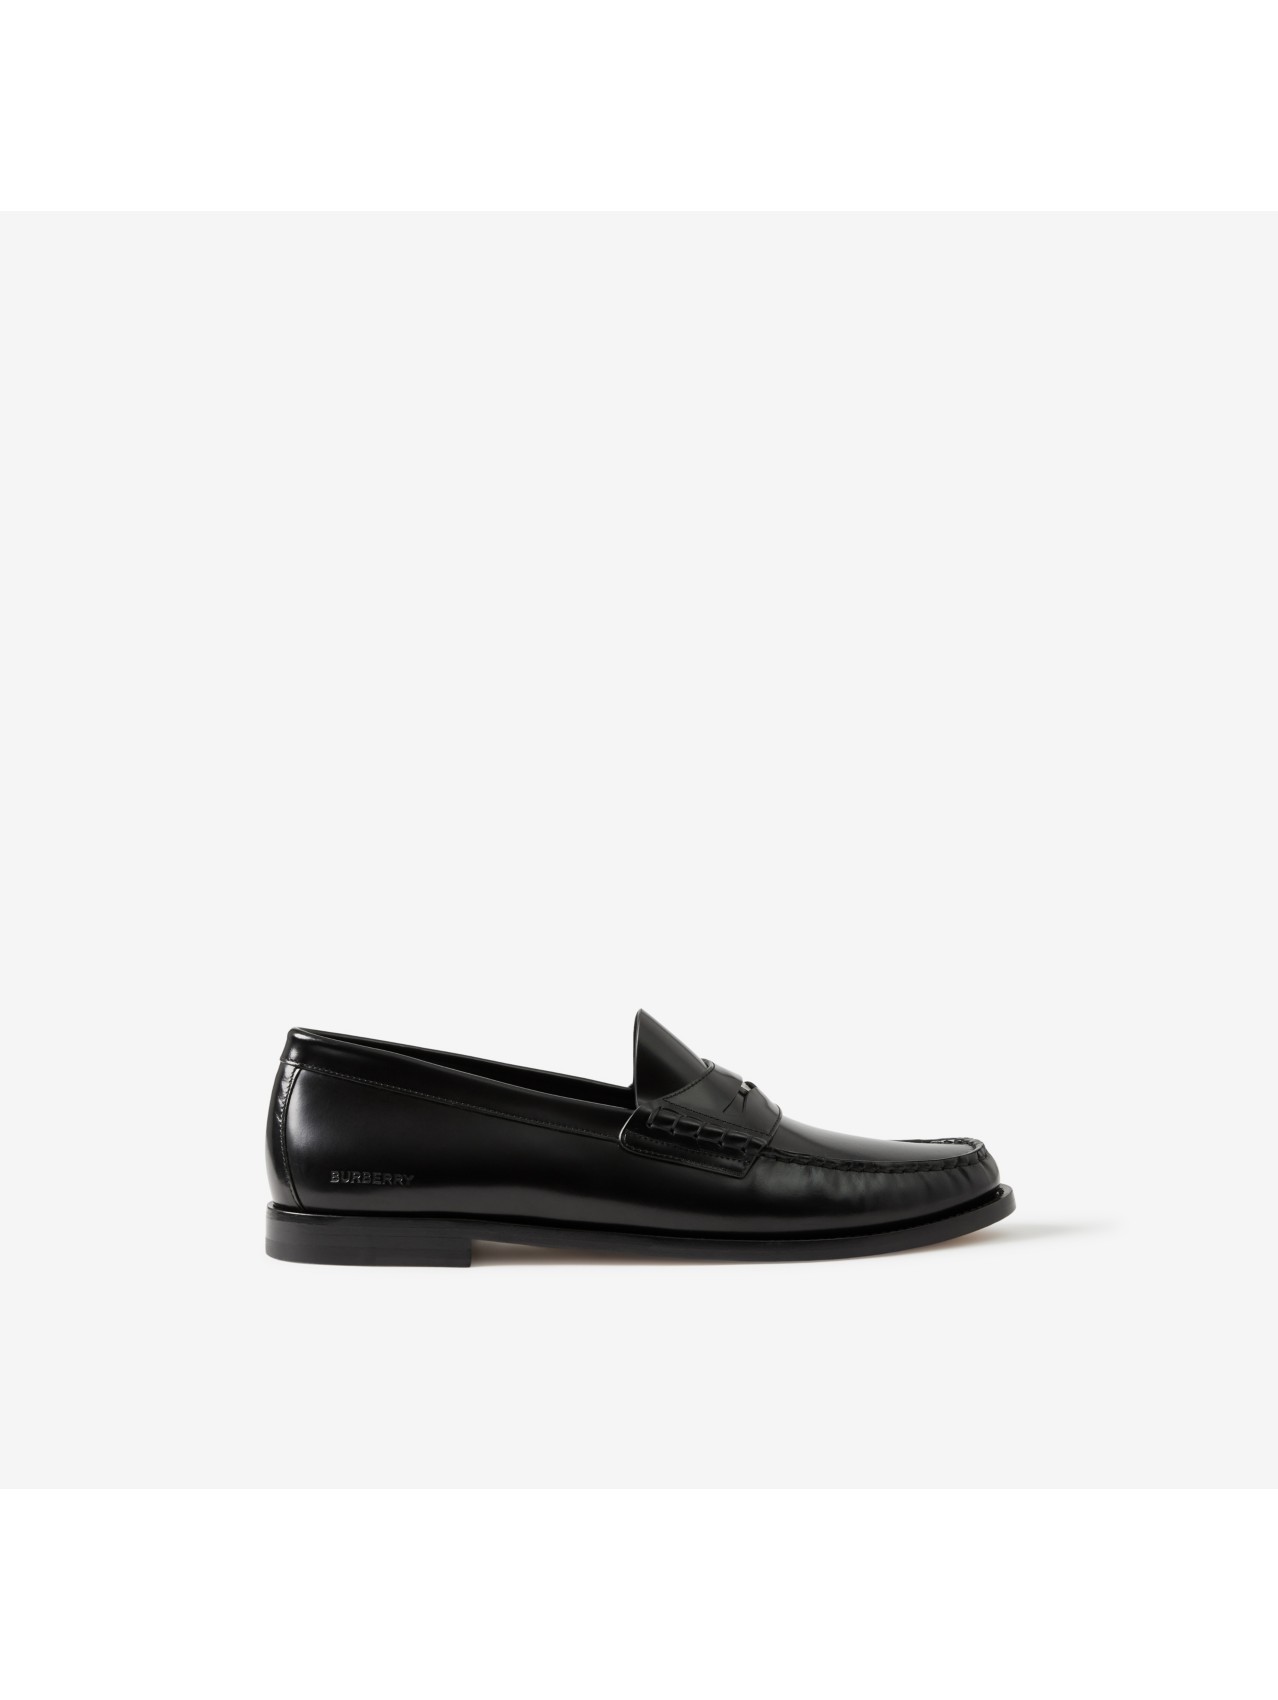 Men's Shoes | Men's Casual & Formal Footwear | Burberry® Official